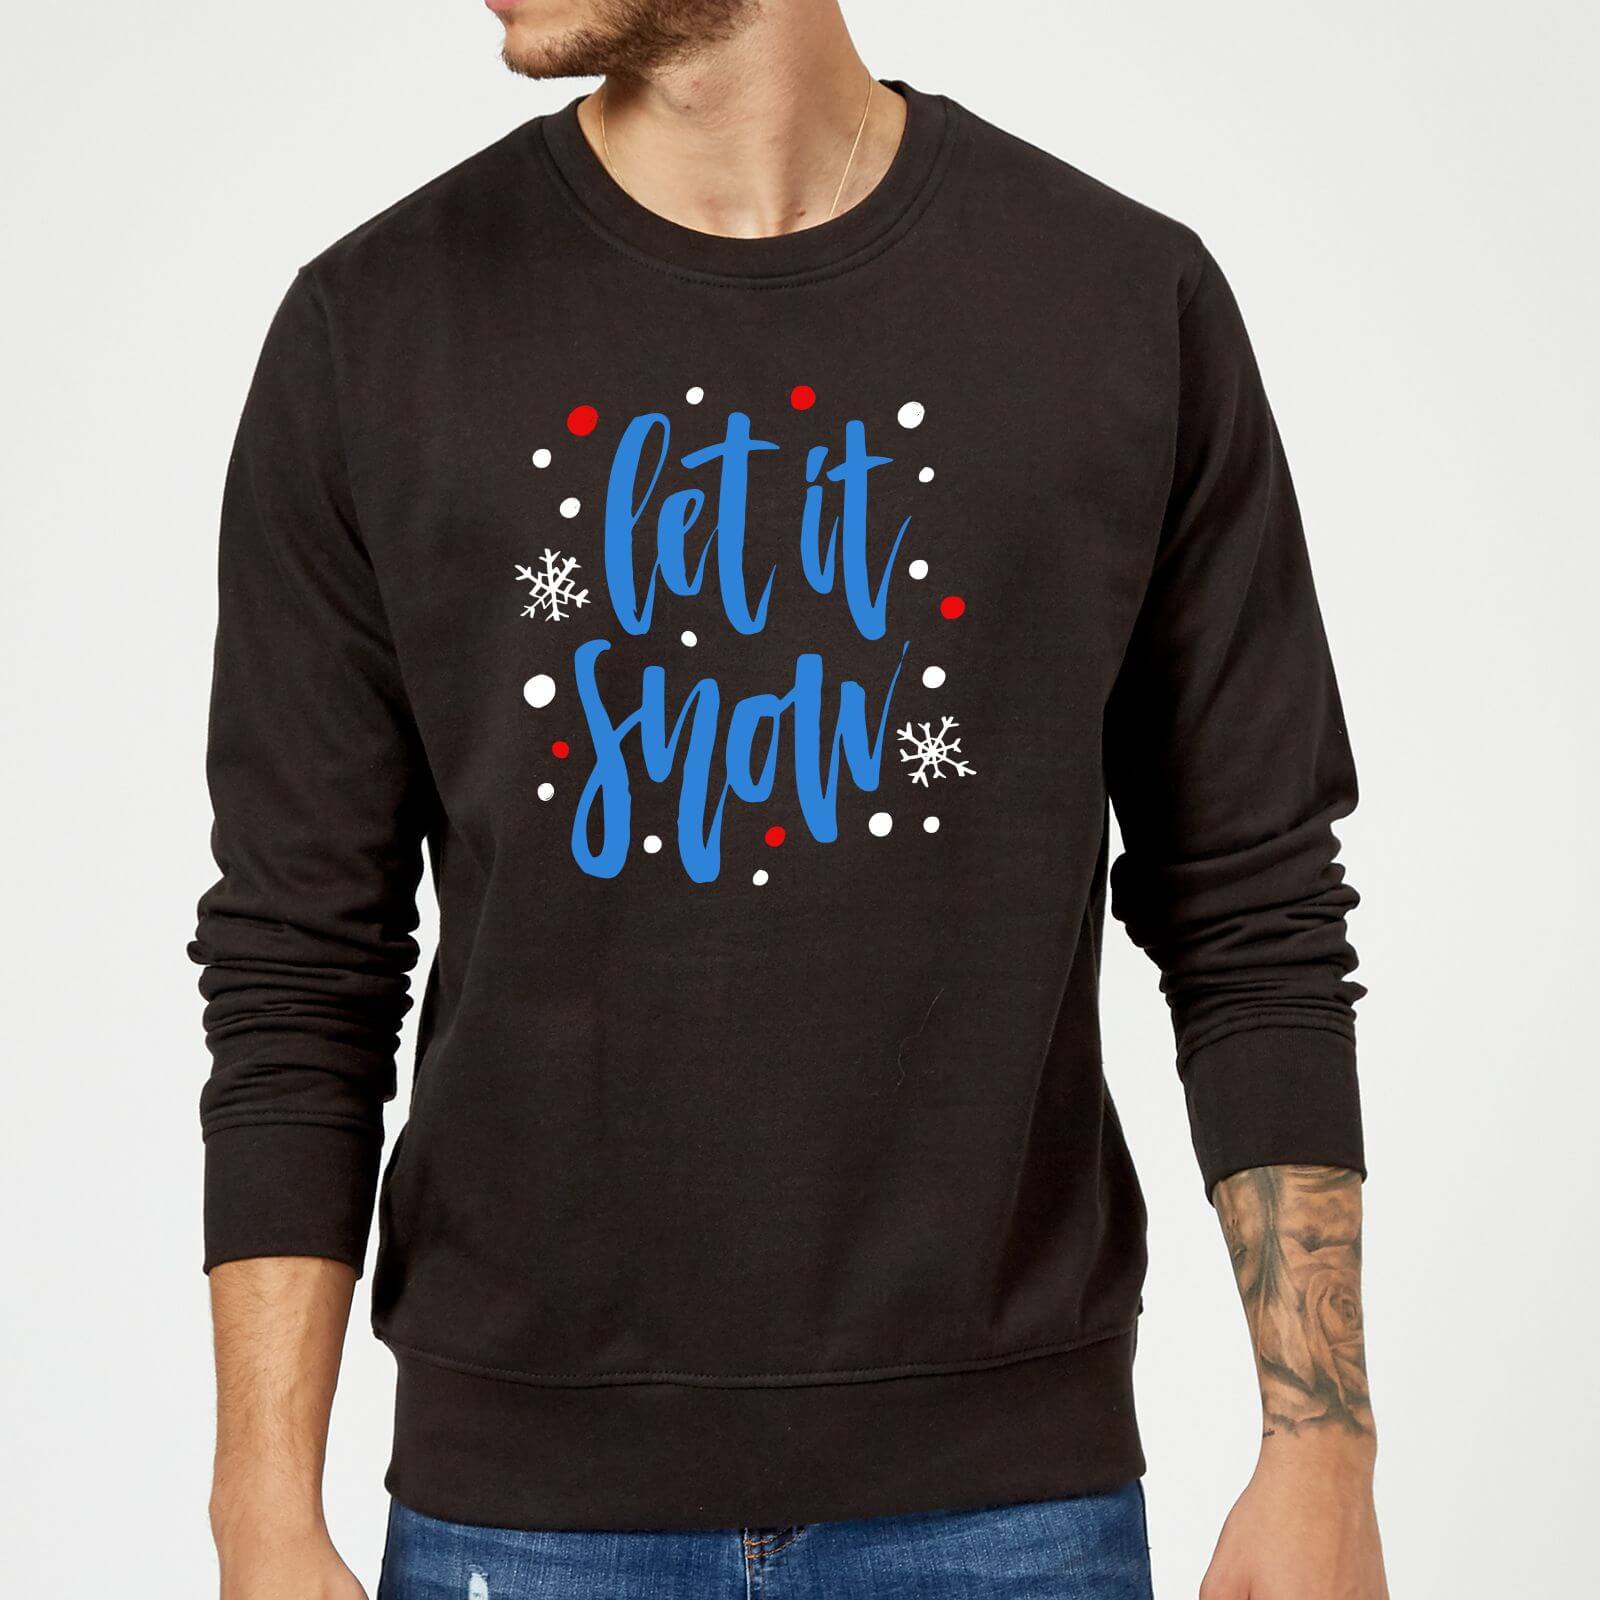 Let It Snow Sweatshirt - Black - 5Xl - Black